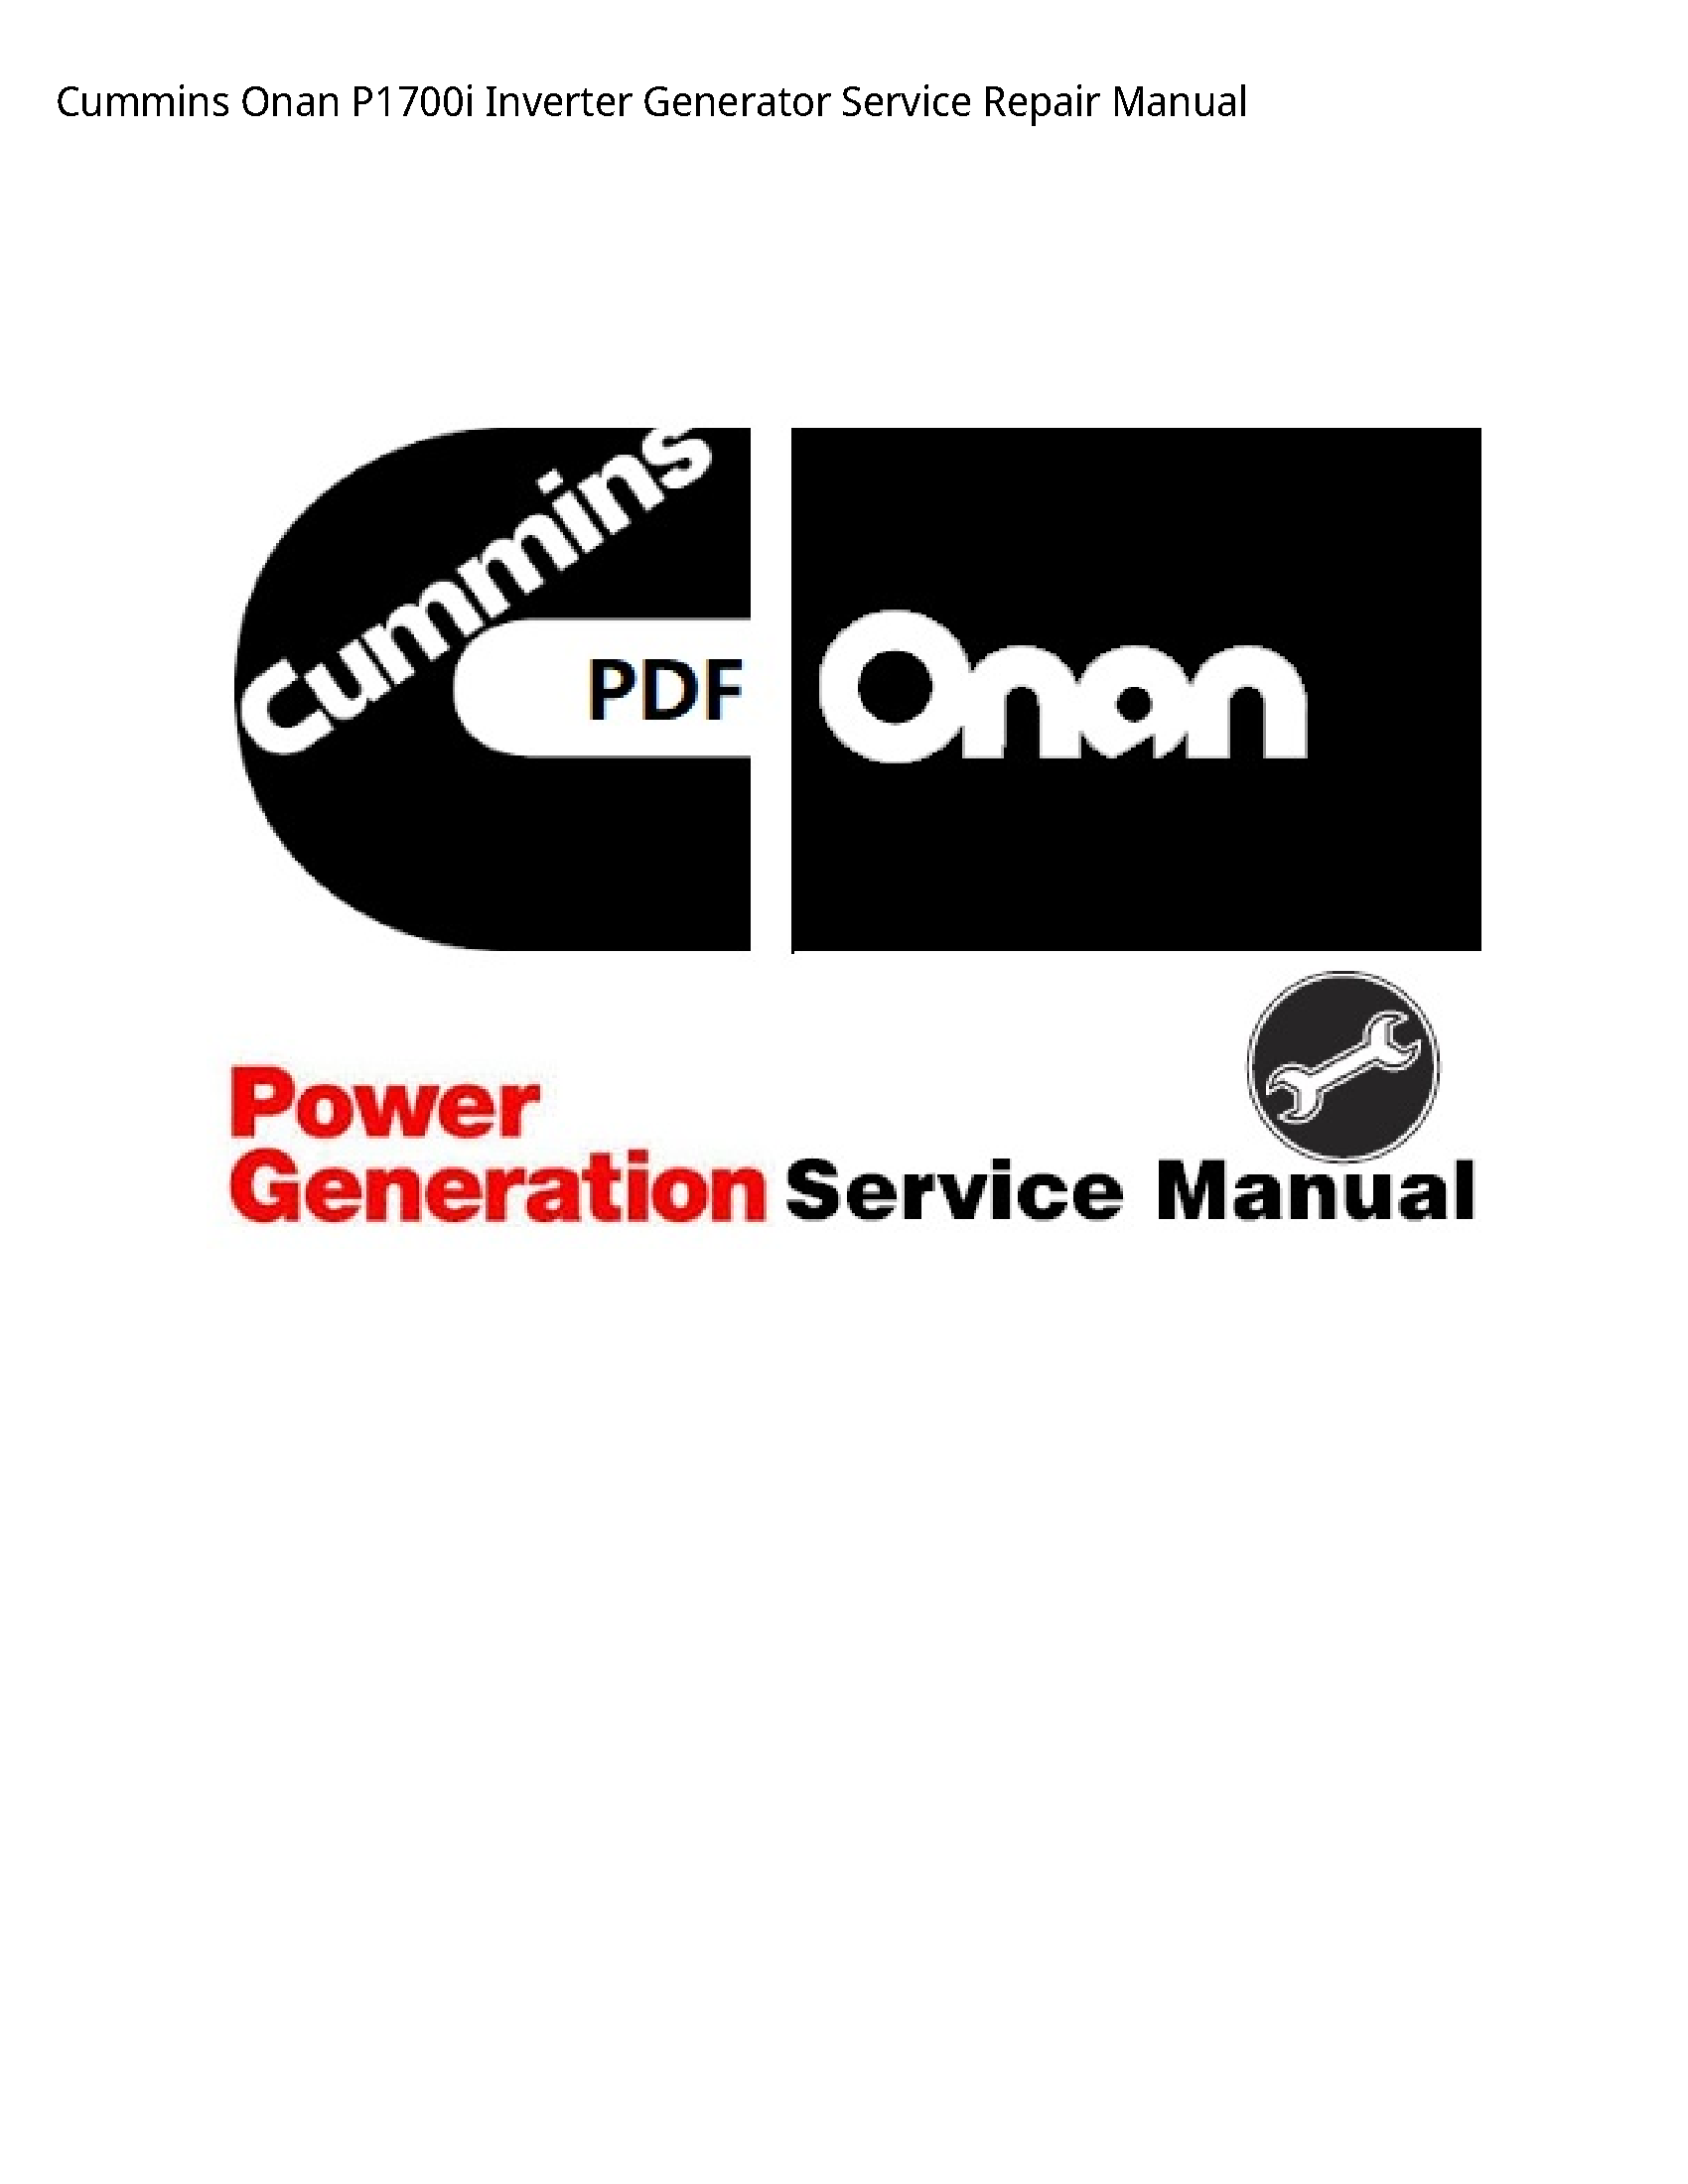 Cummins P1700i Onan Inverter Generator manual